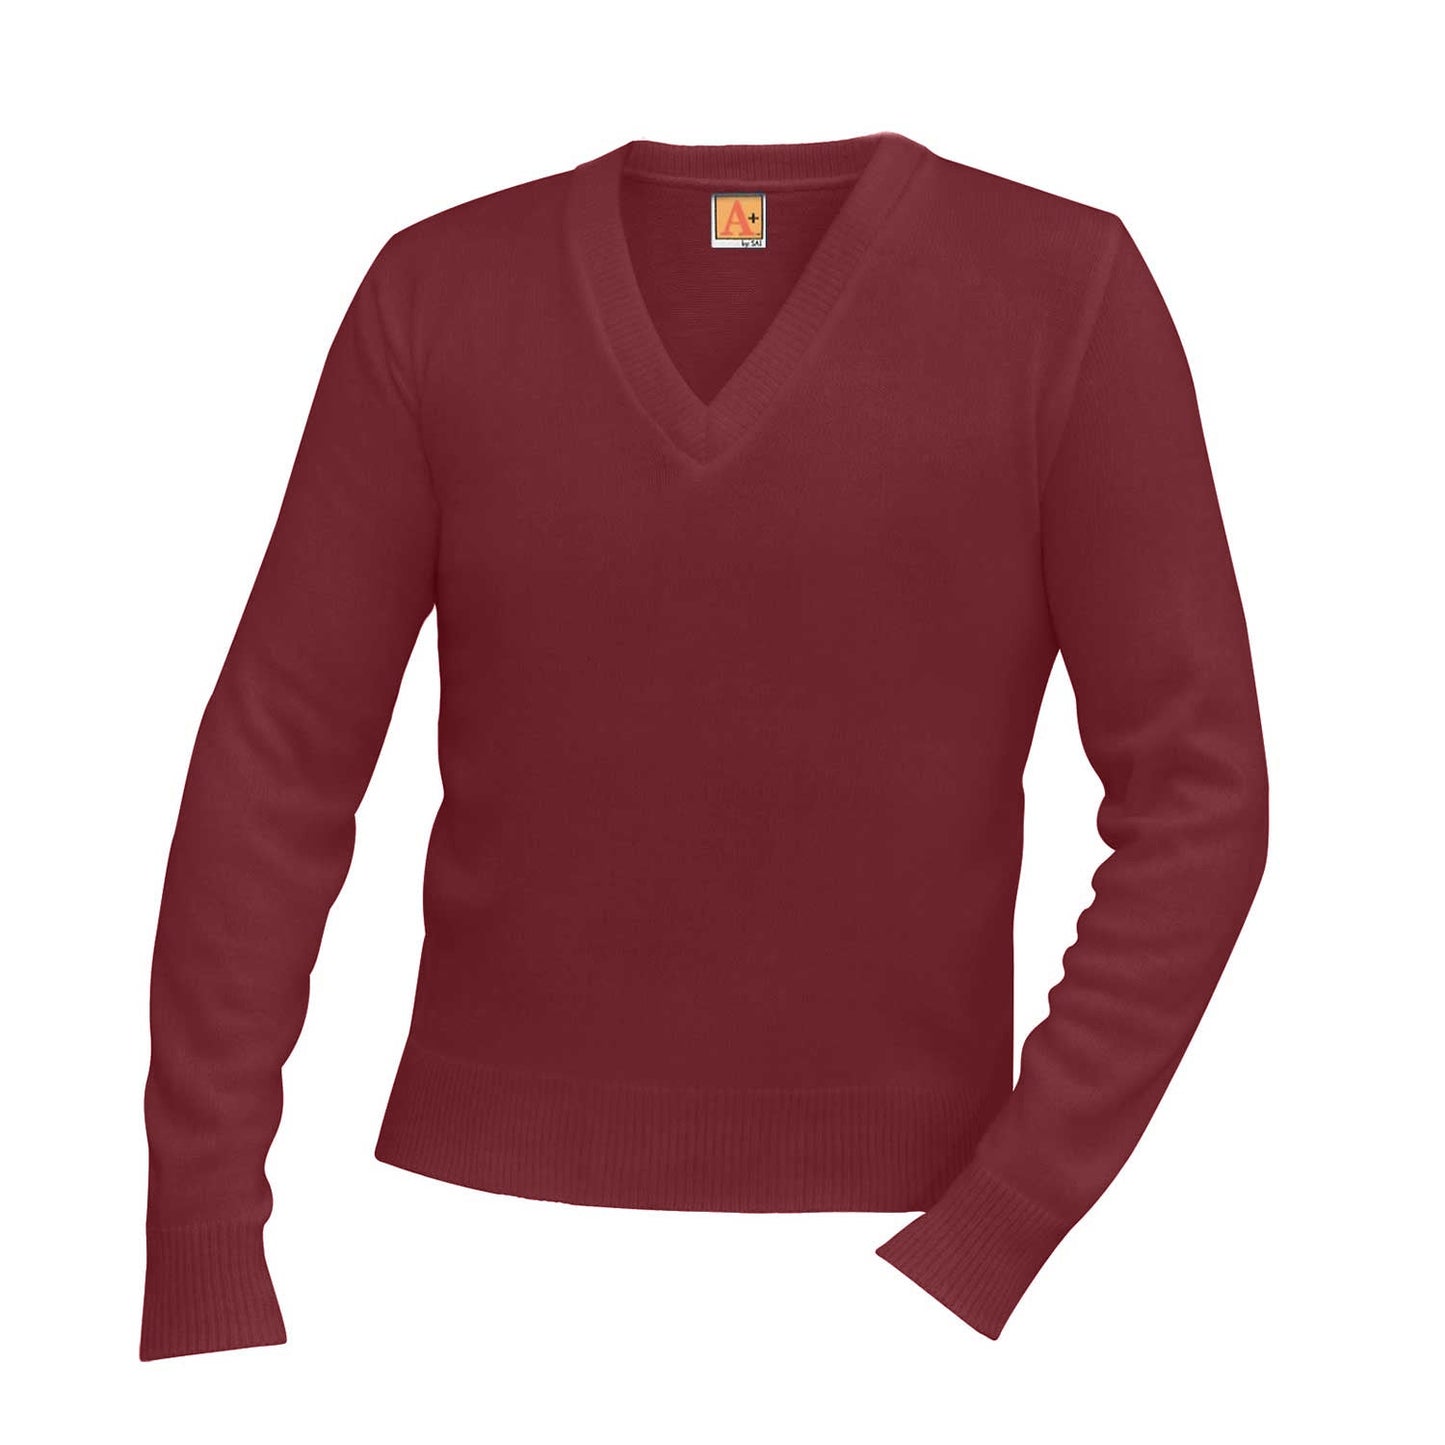 Unisex V-Neck Pullover Jersey Knit Sweater w/Logo - 1106